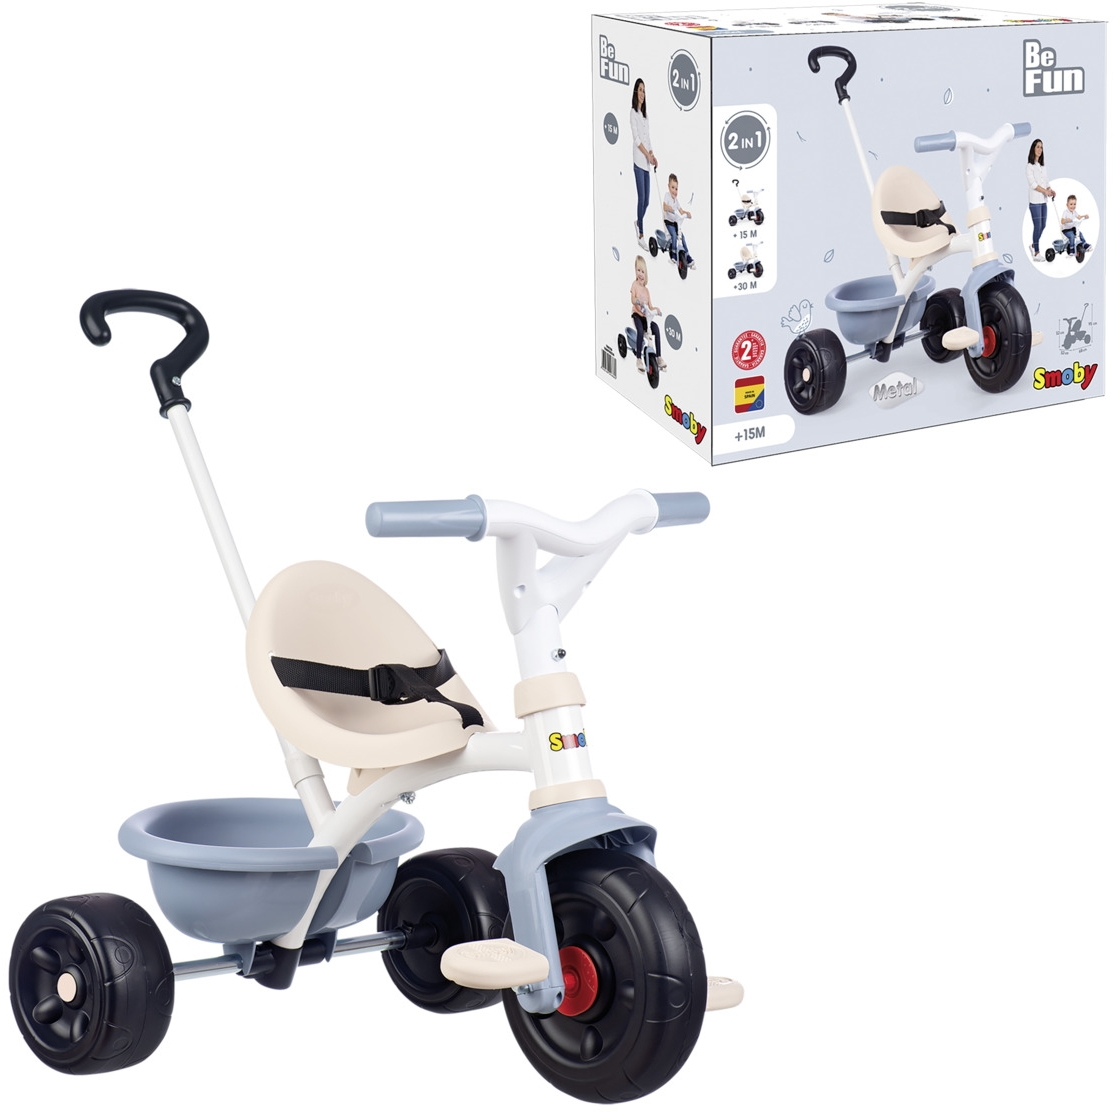 Spielwaren Express - Spielzeug Be Dreirad blau Fahrzeug Smoby Outdoor Fun 7600740336